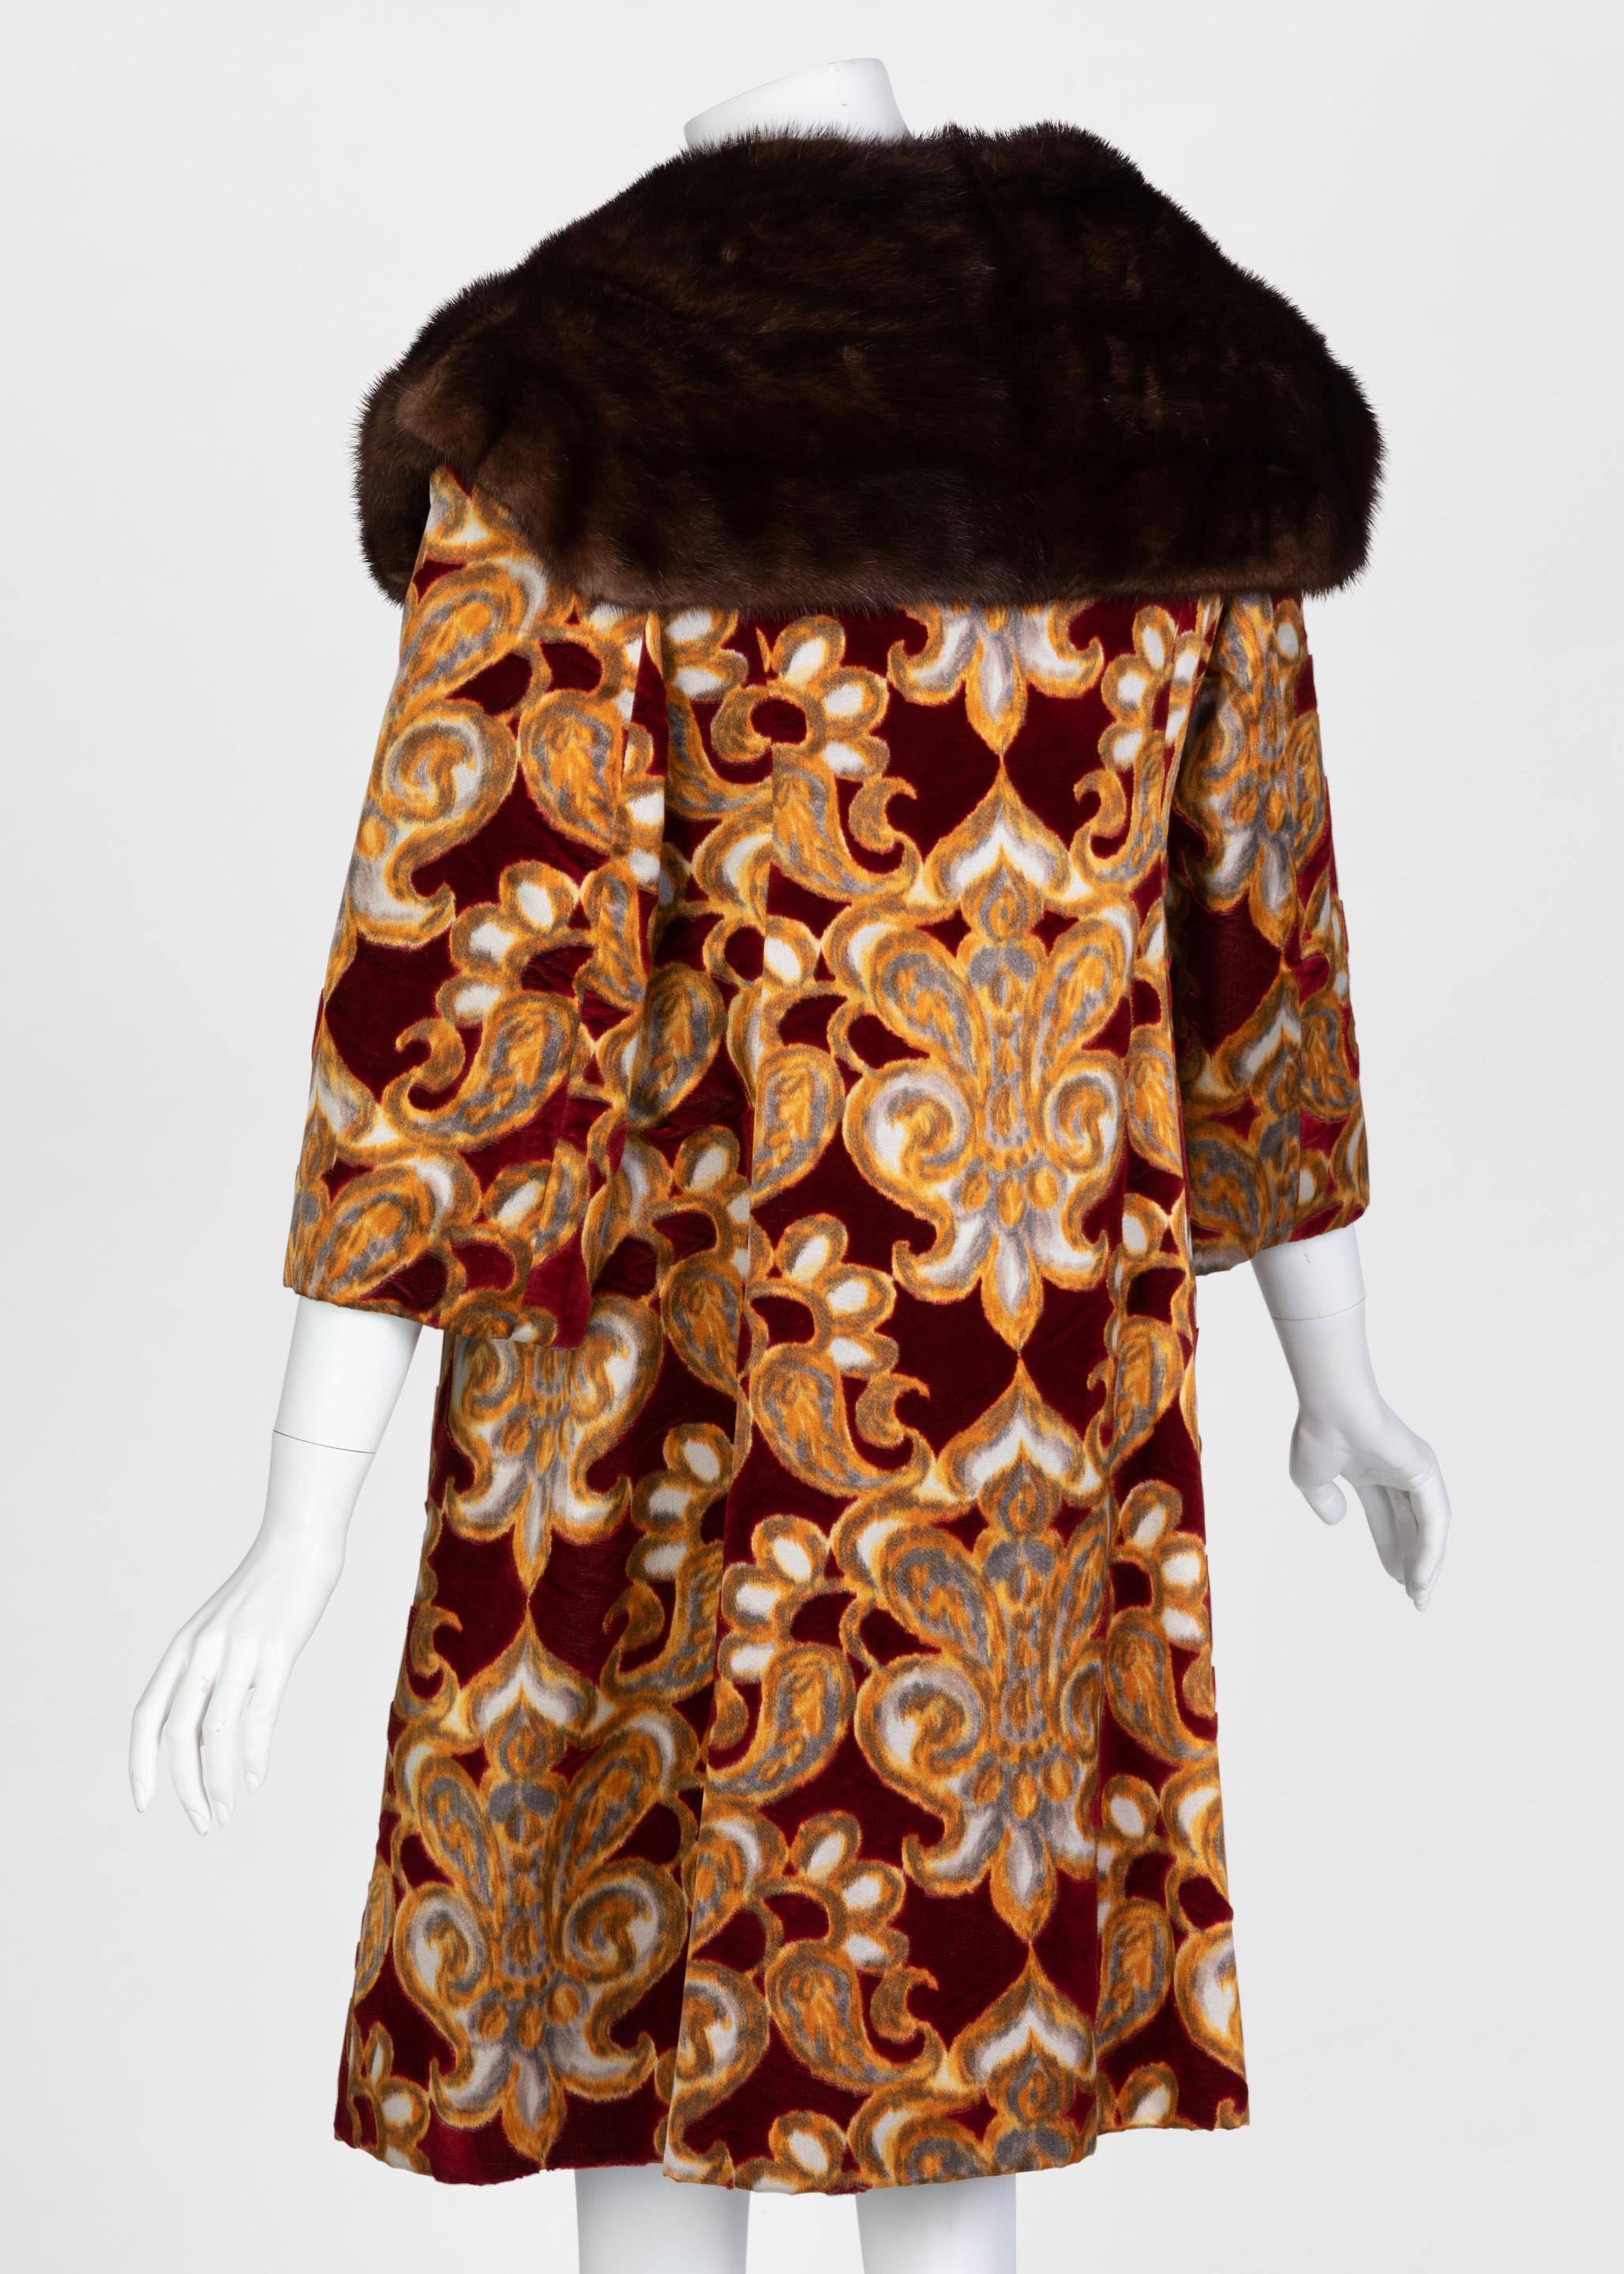 Galanos Couture Red Gold Velvet Fur Trimmed Coat & Dress Ensemble, 1982 For Sale 2